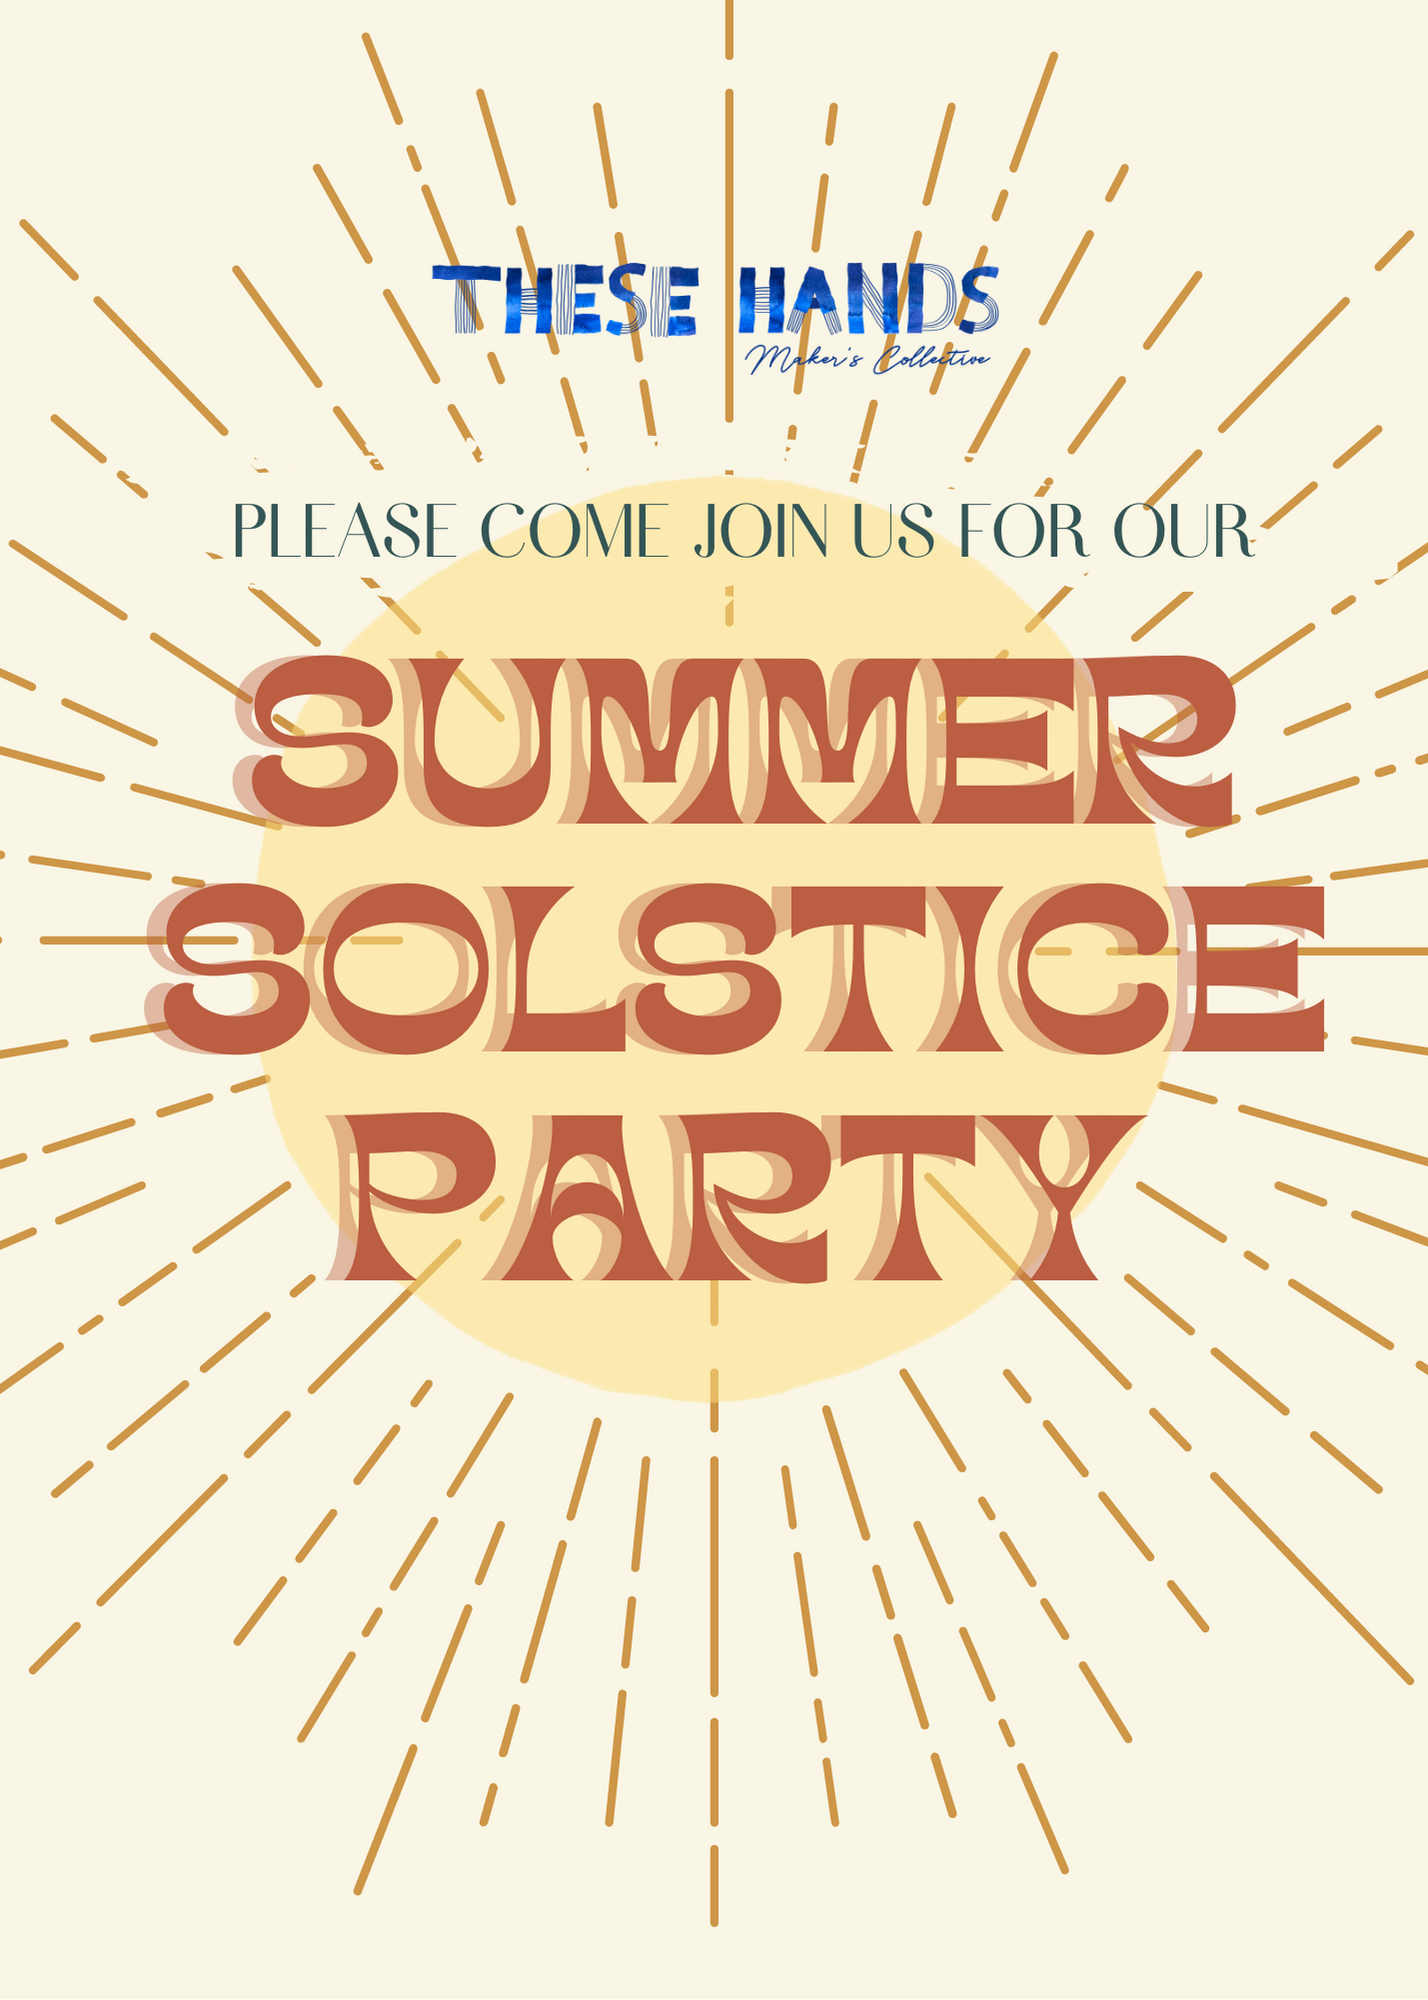 JUNE 21st 5-9pm - SUMMER SOLSTICE PARTY